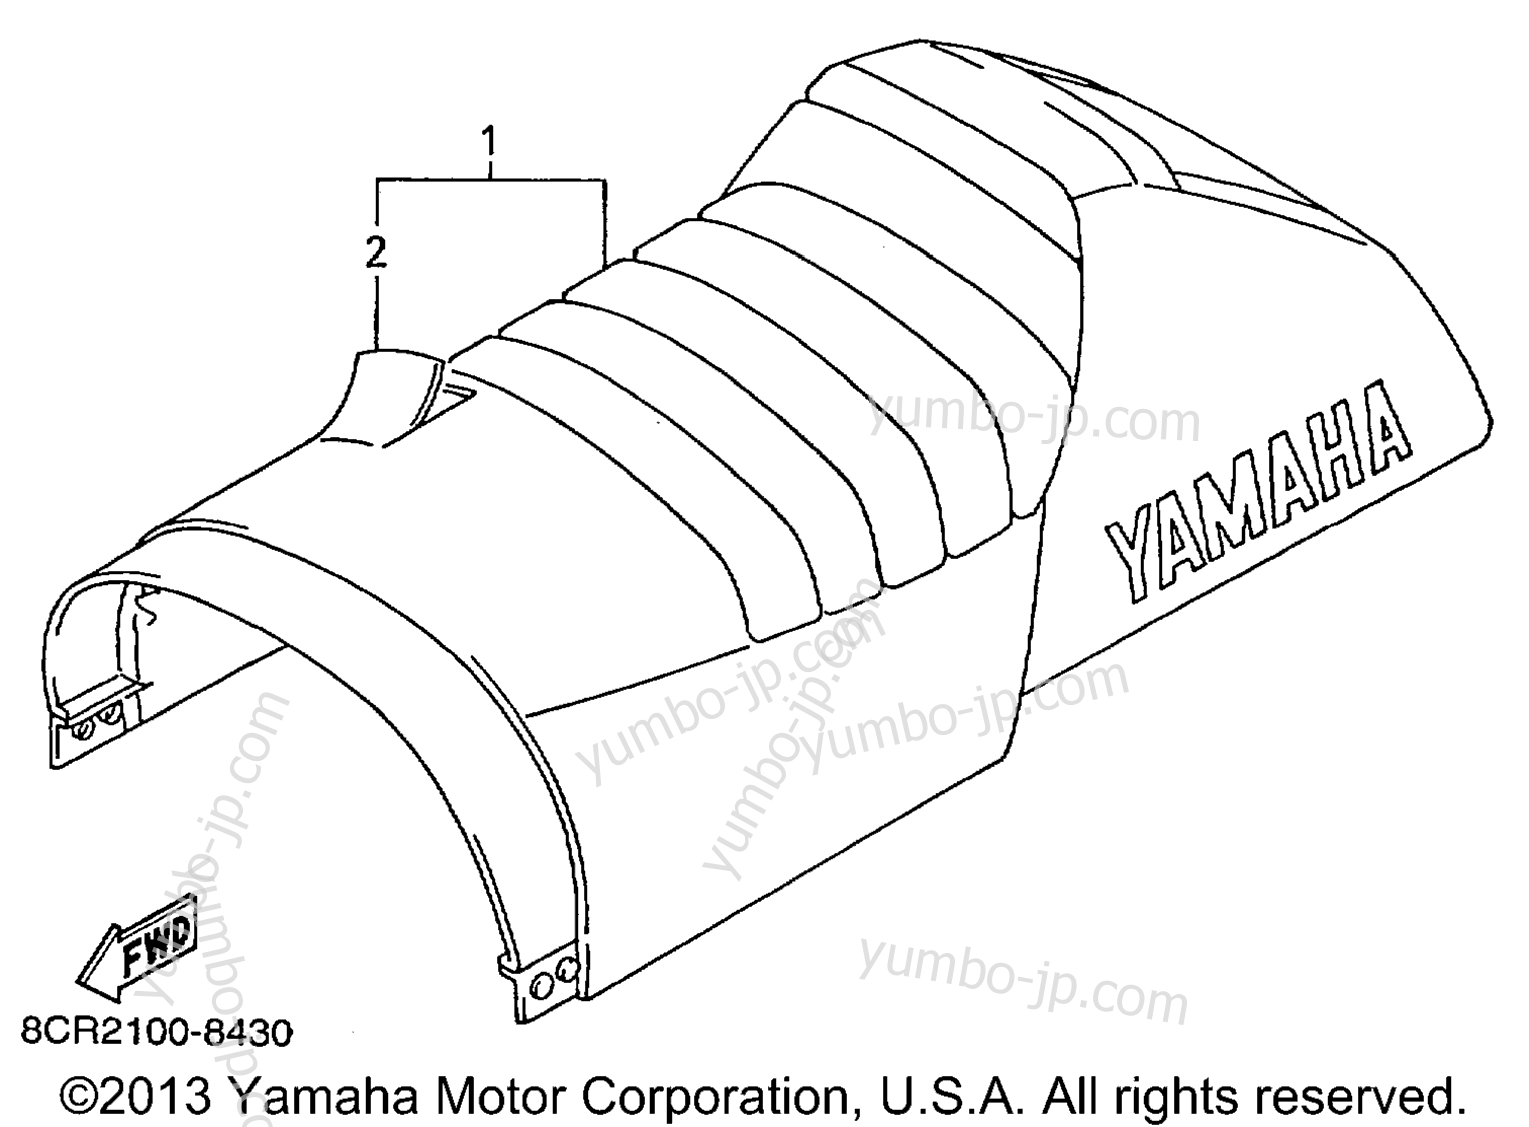 Alternate Single Seat Assy for snowmobiles YAMAHA VMAX 700 XTC (VX700XTCB) 1998 year